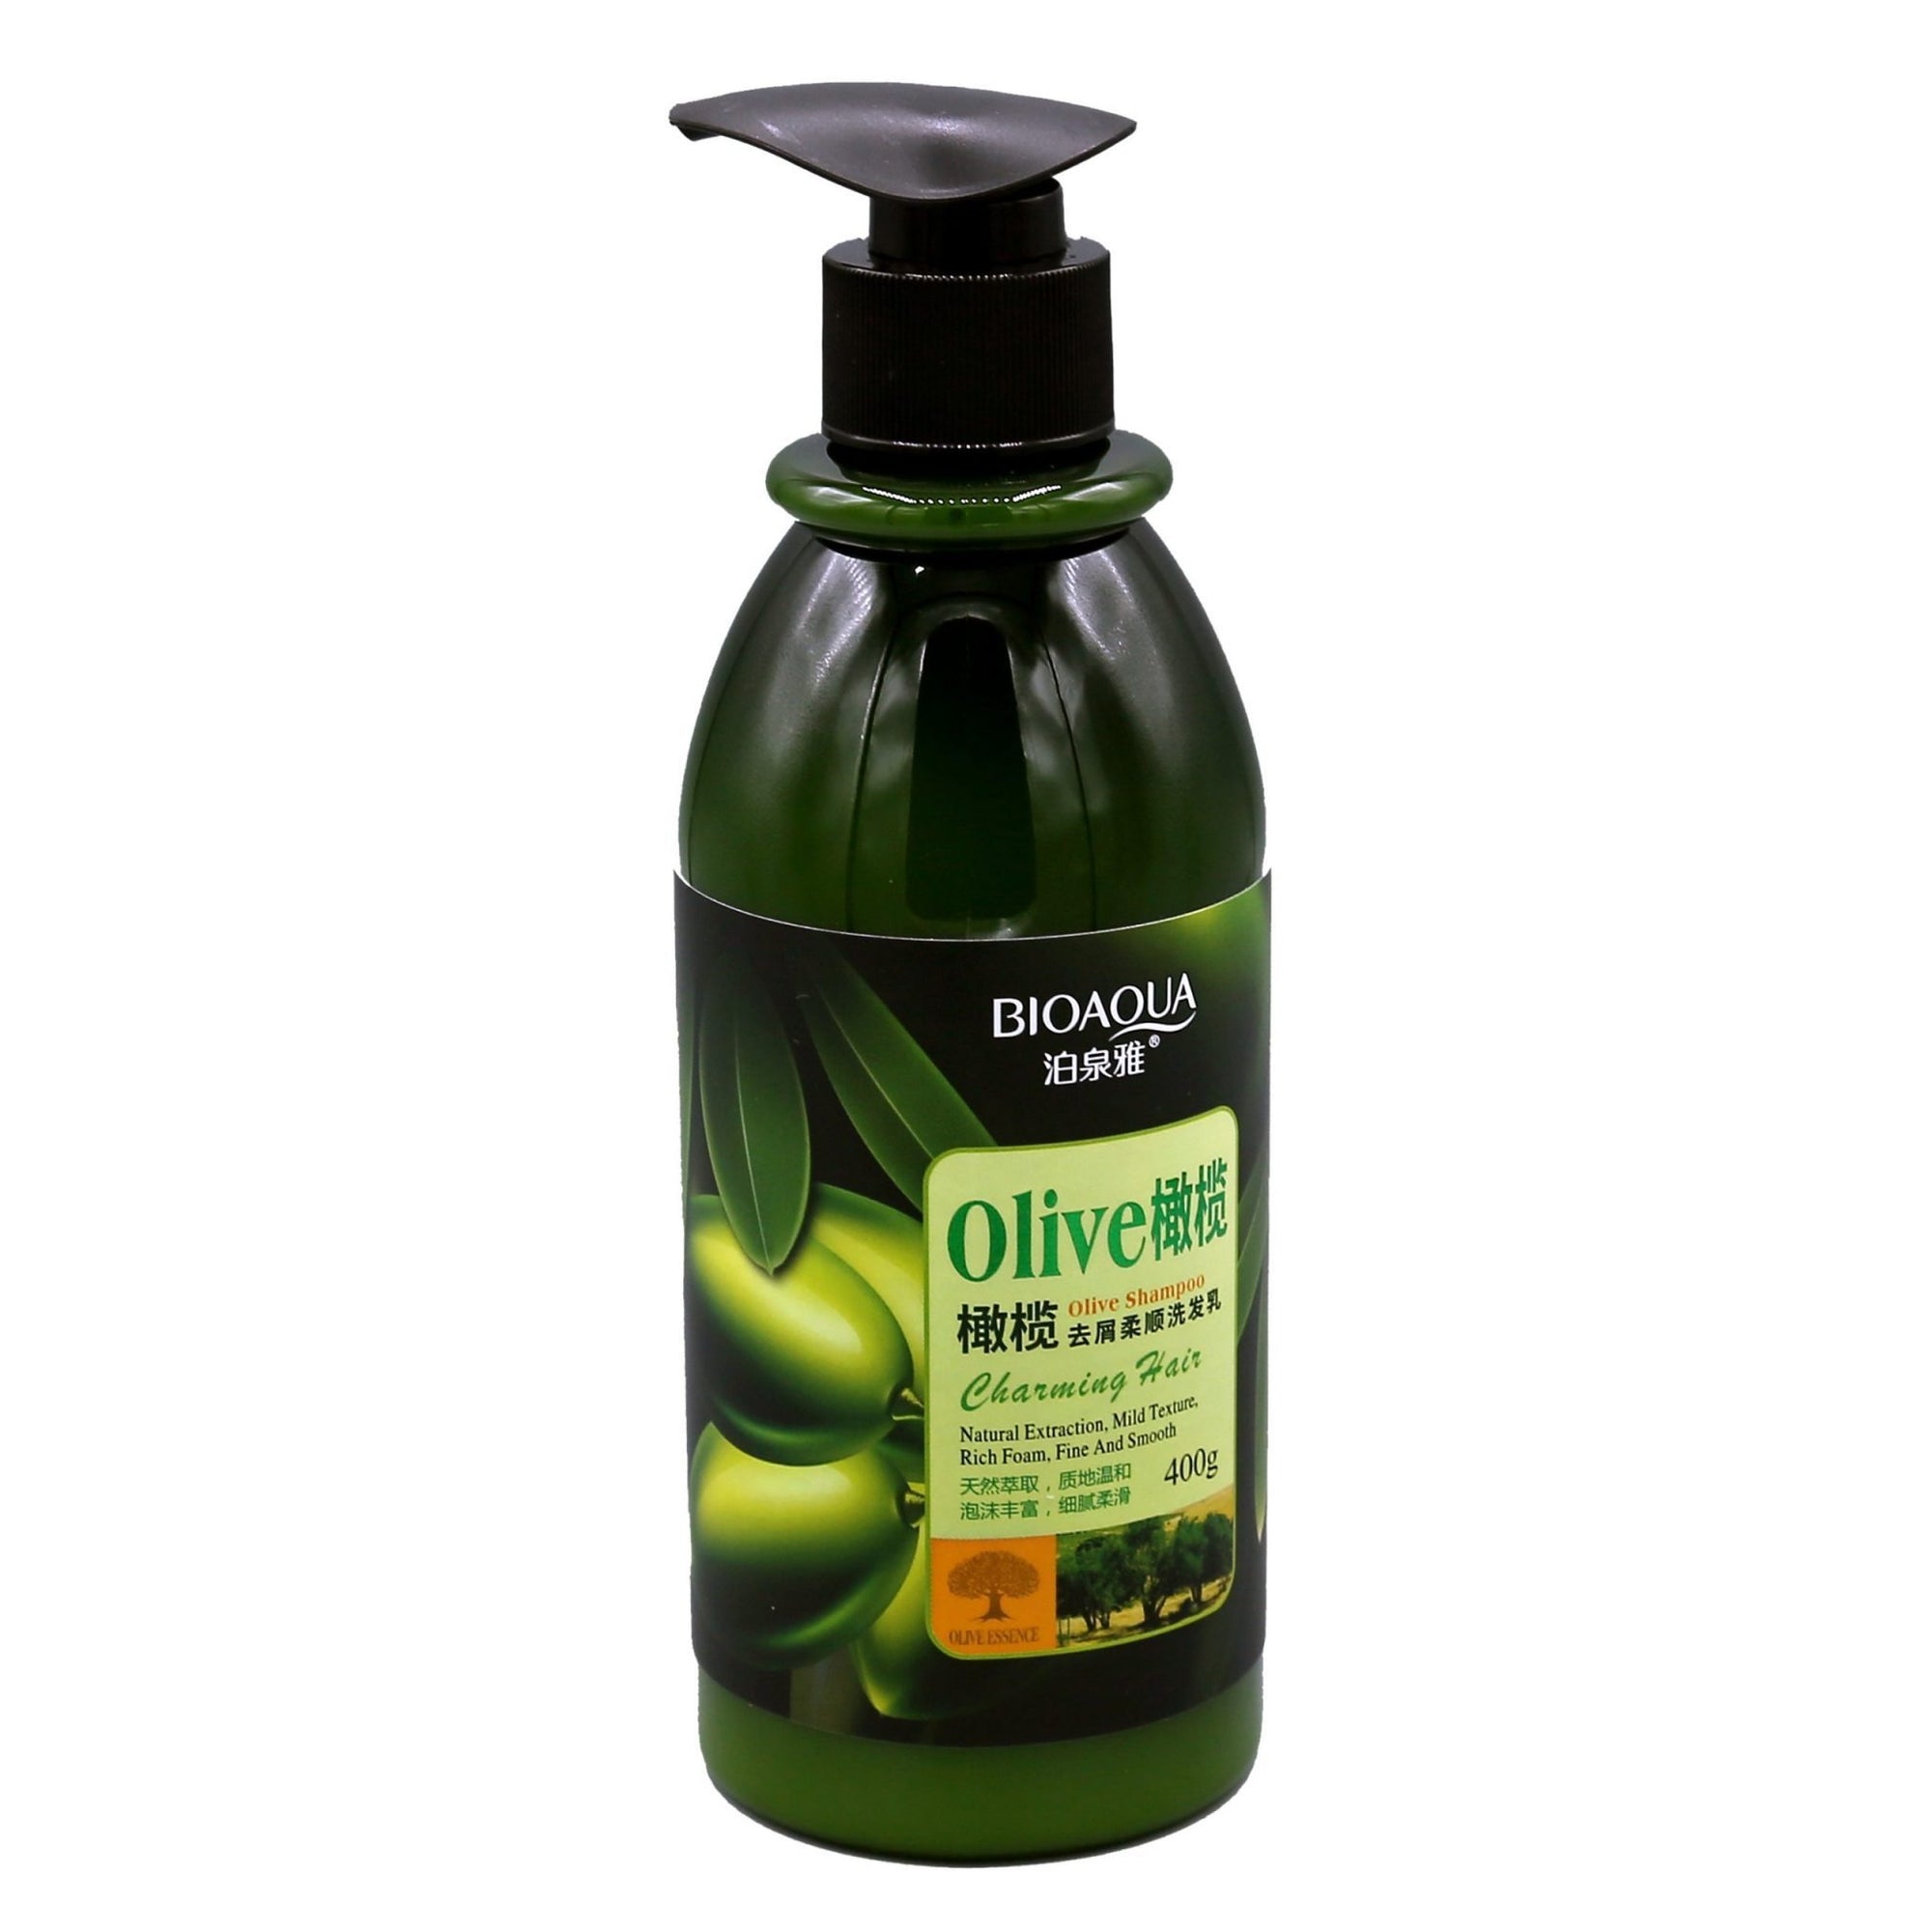 Bio Aqua Olive Shampoo Charming Hair 400g freeshipping - lasertag.pk